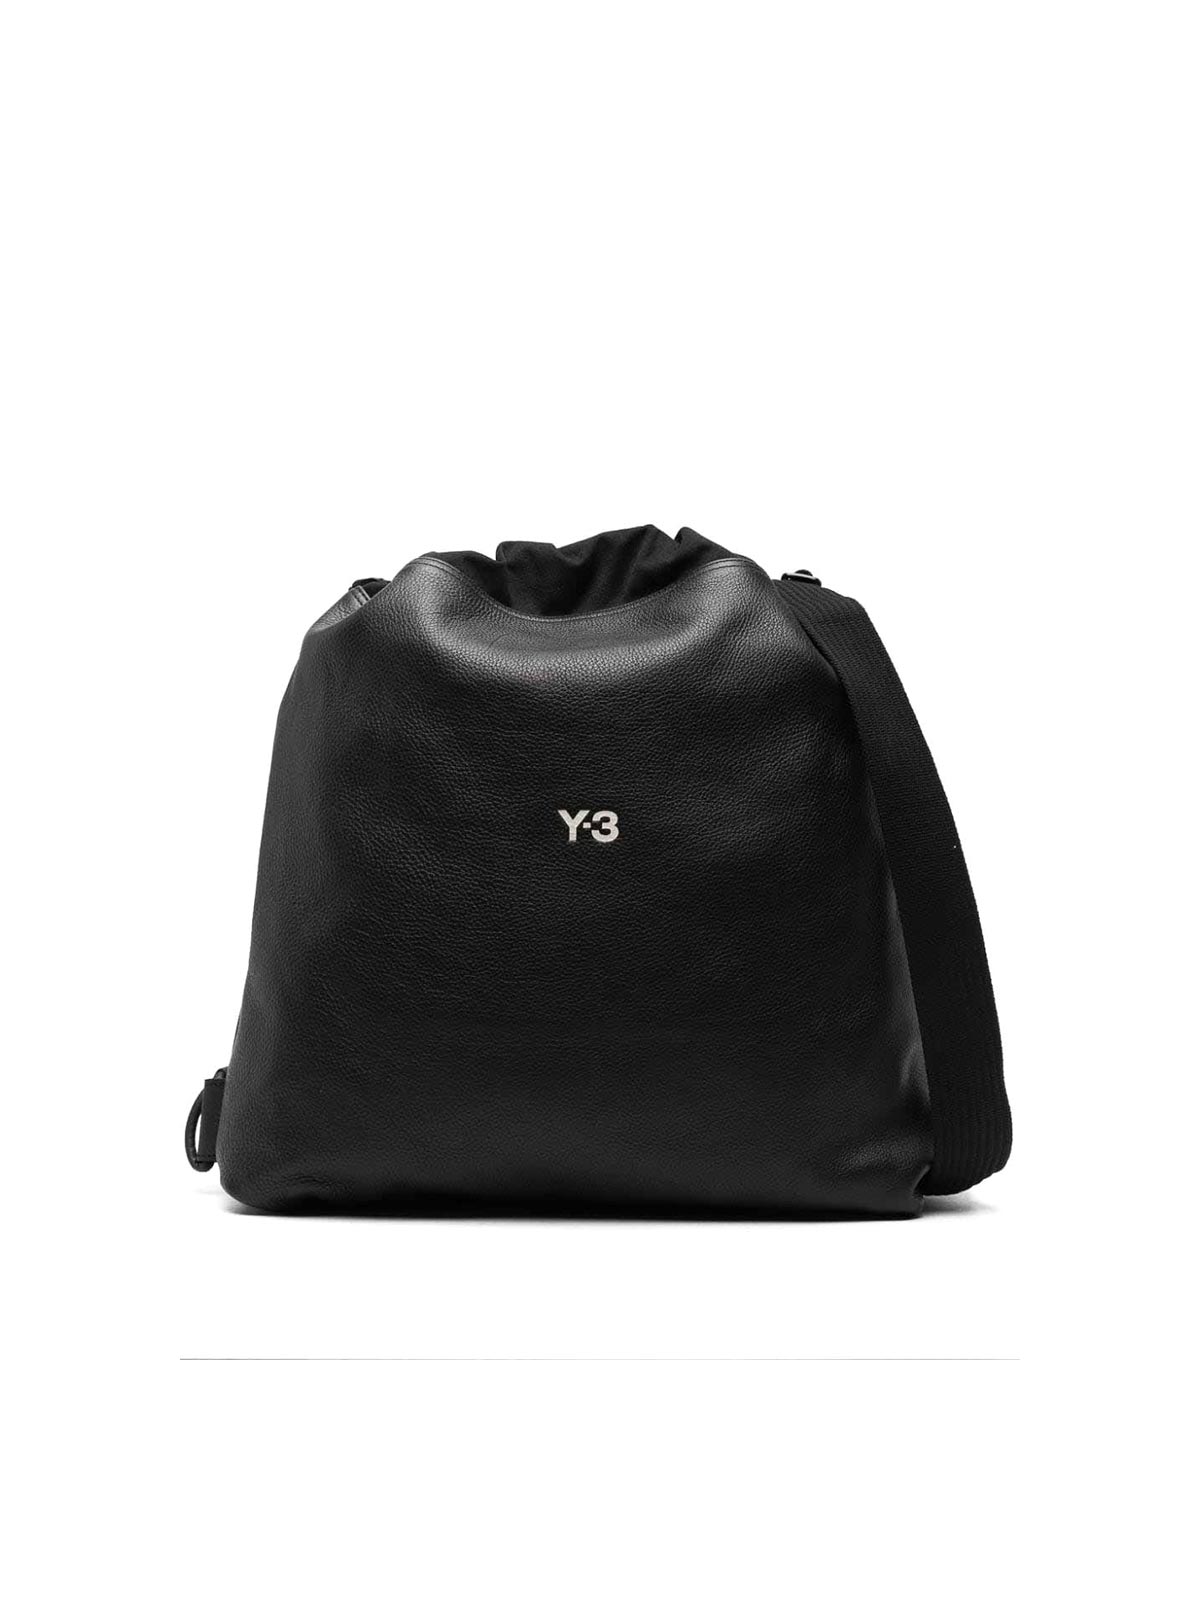 Cross body bags Y-3 - Y-3 lux gym bag - IJ9877BLACK